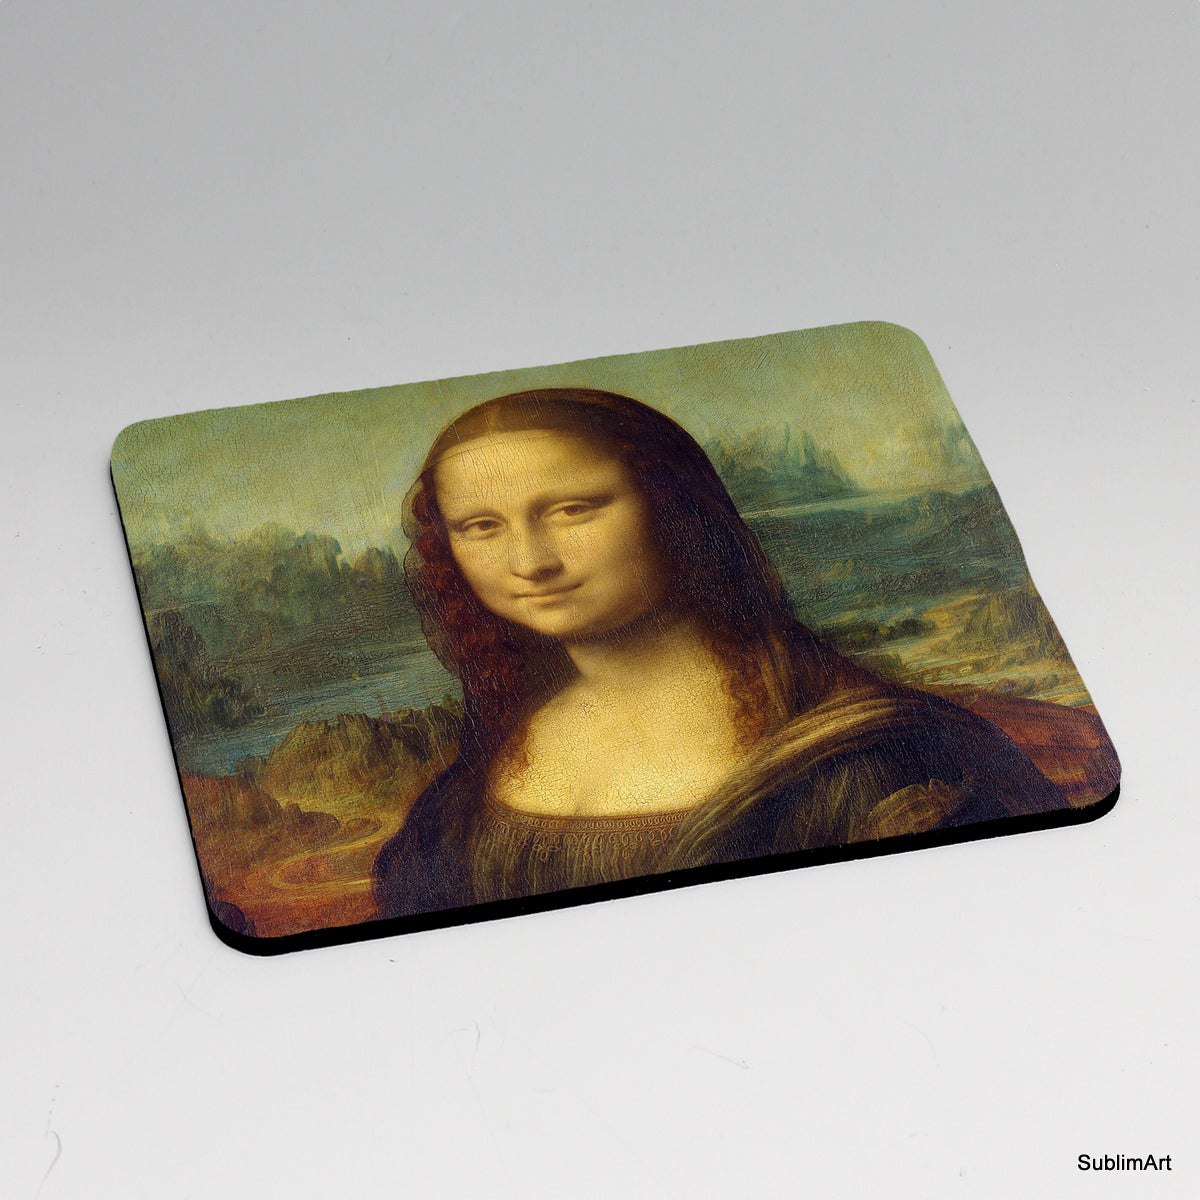 MOUSE PAD: Design La Gioconda - Mona Lisa